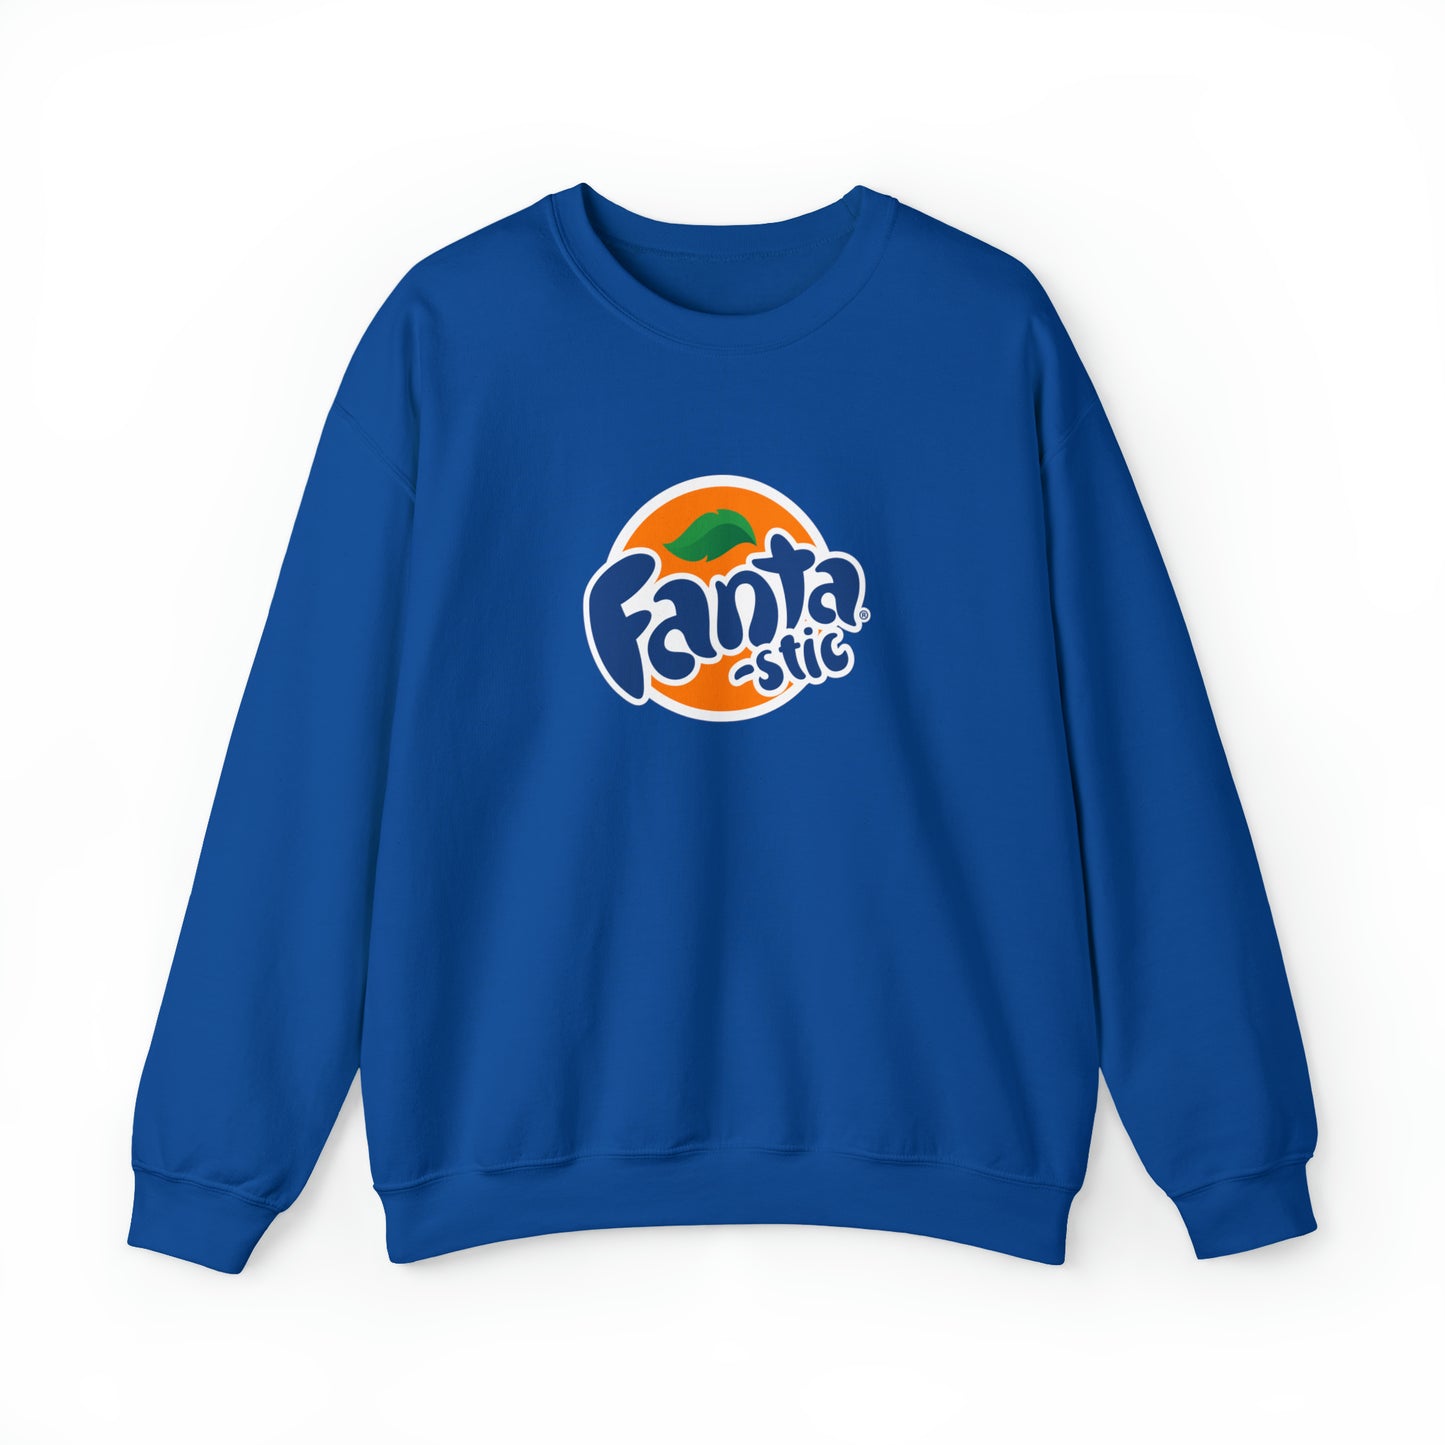 Custom Parody Crewneck Sweatshirt, Fanta-stic Design